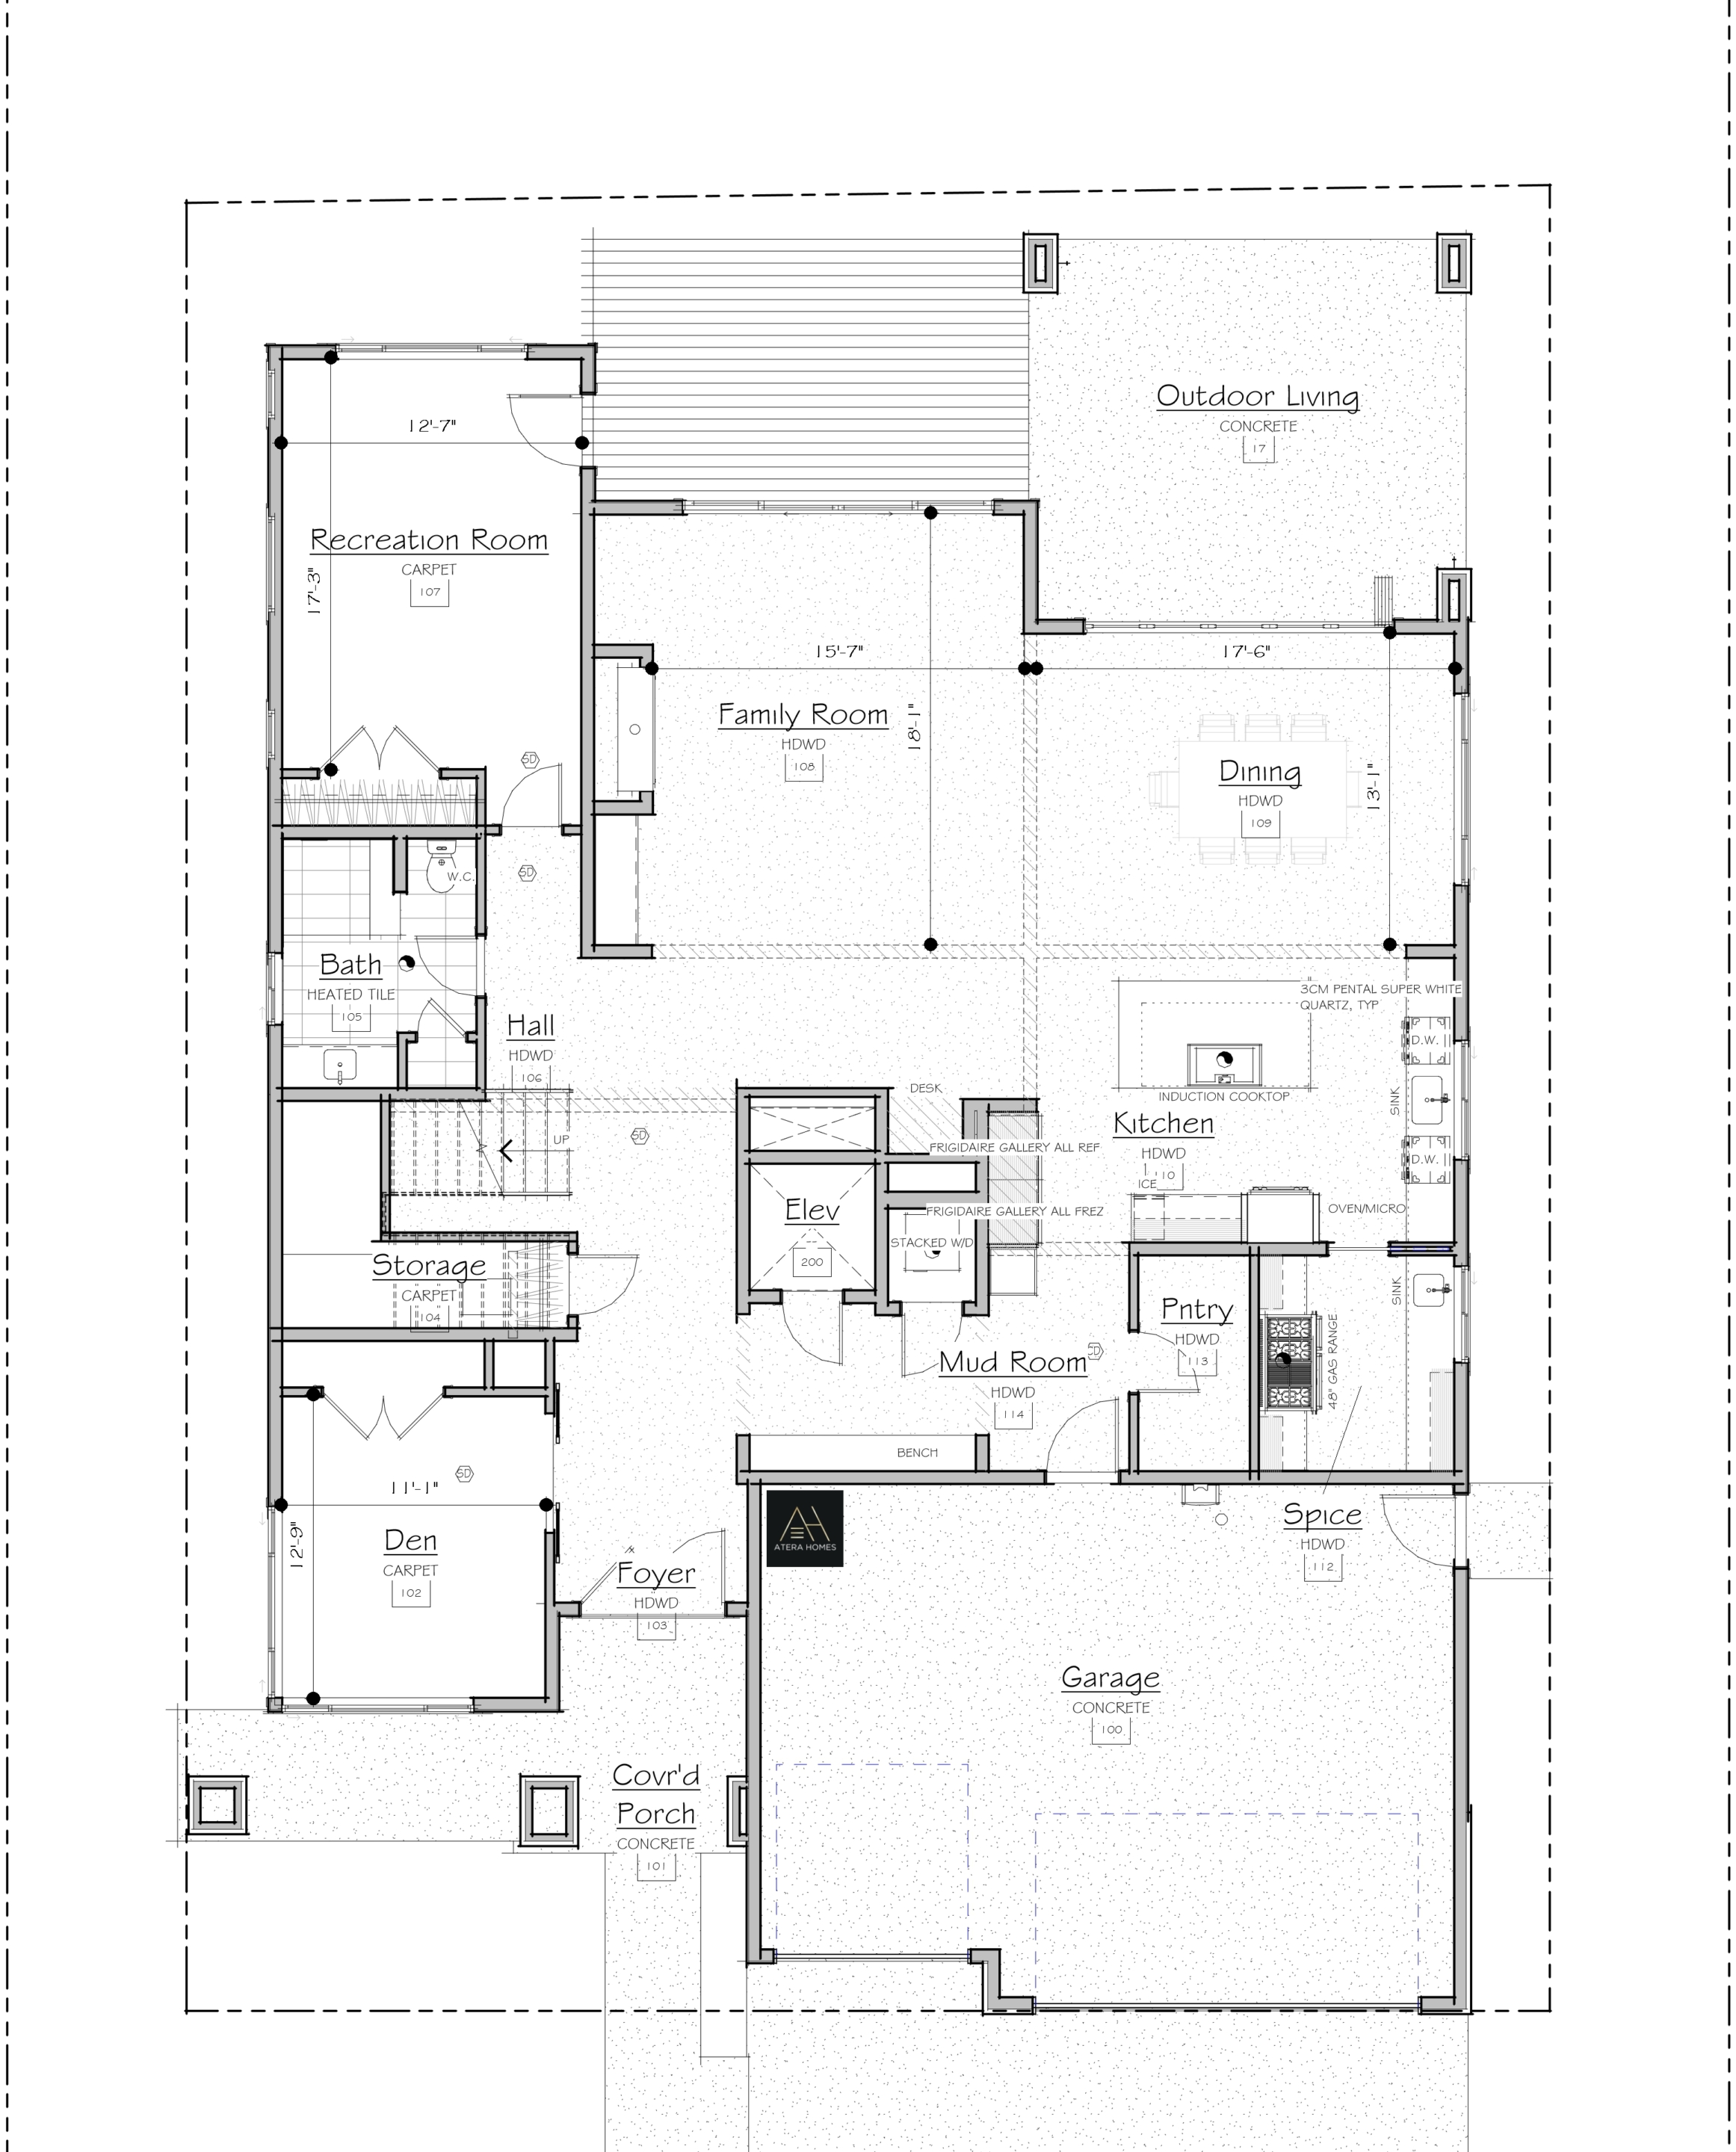 Eastgate Home Plan - Floor-Plan-Level_1